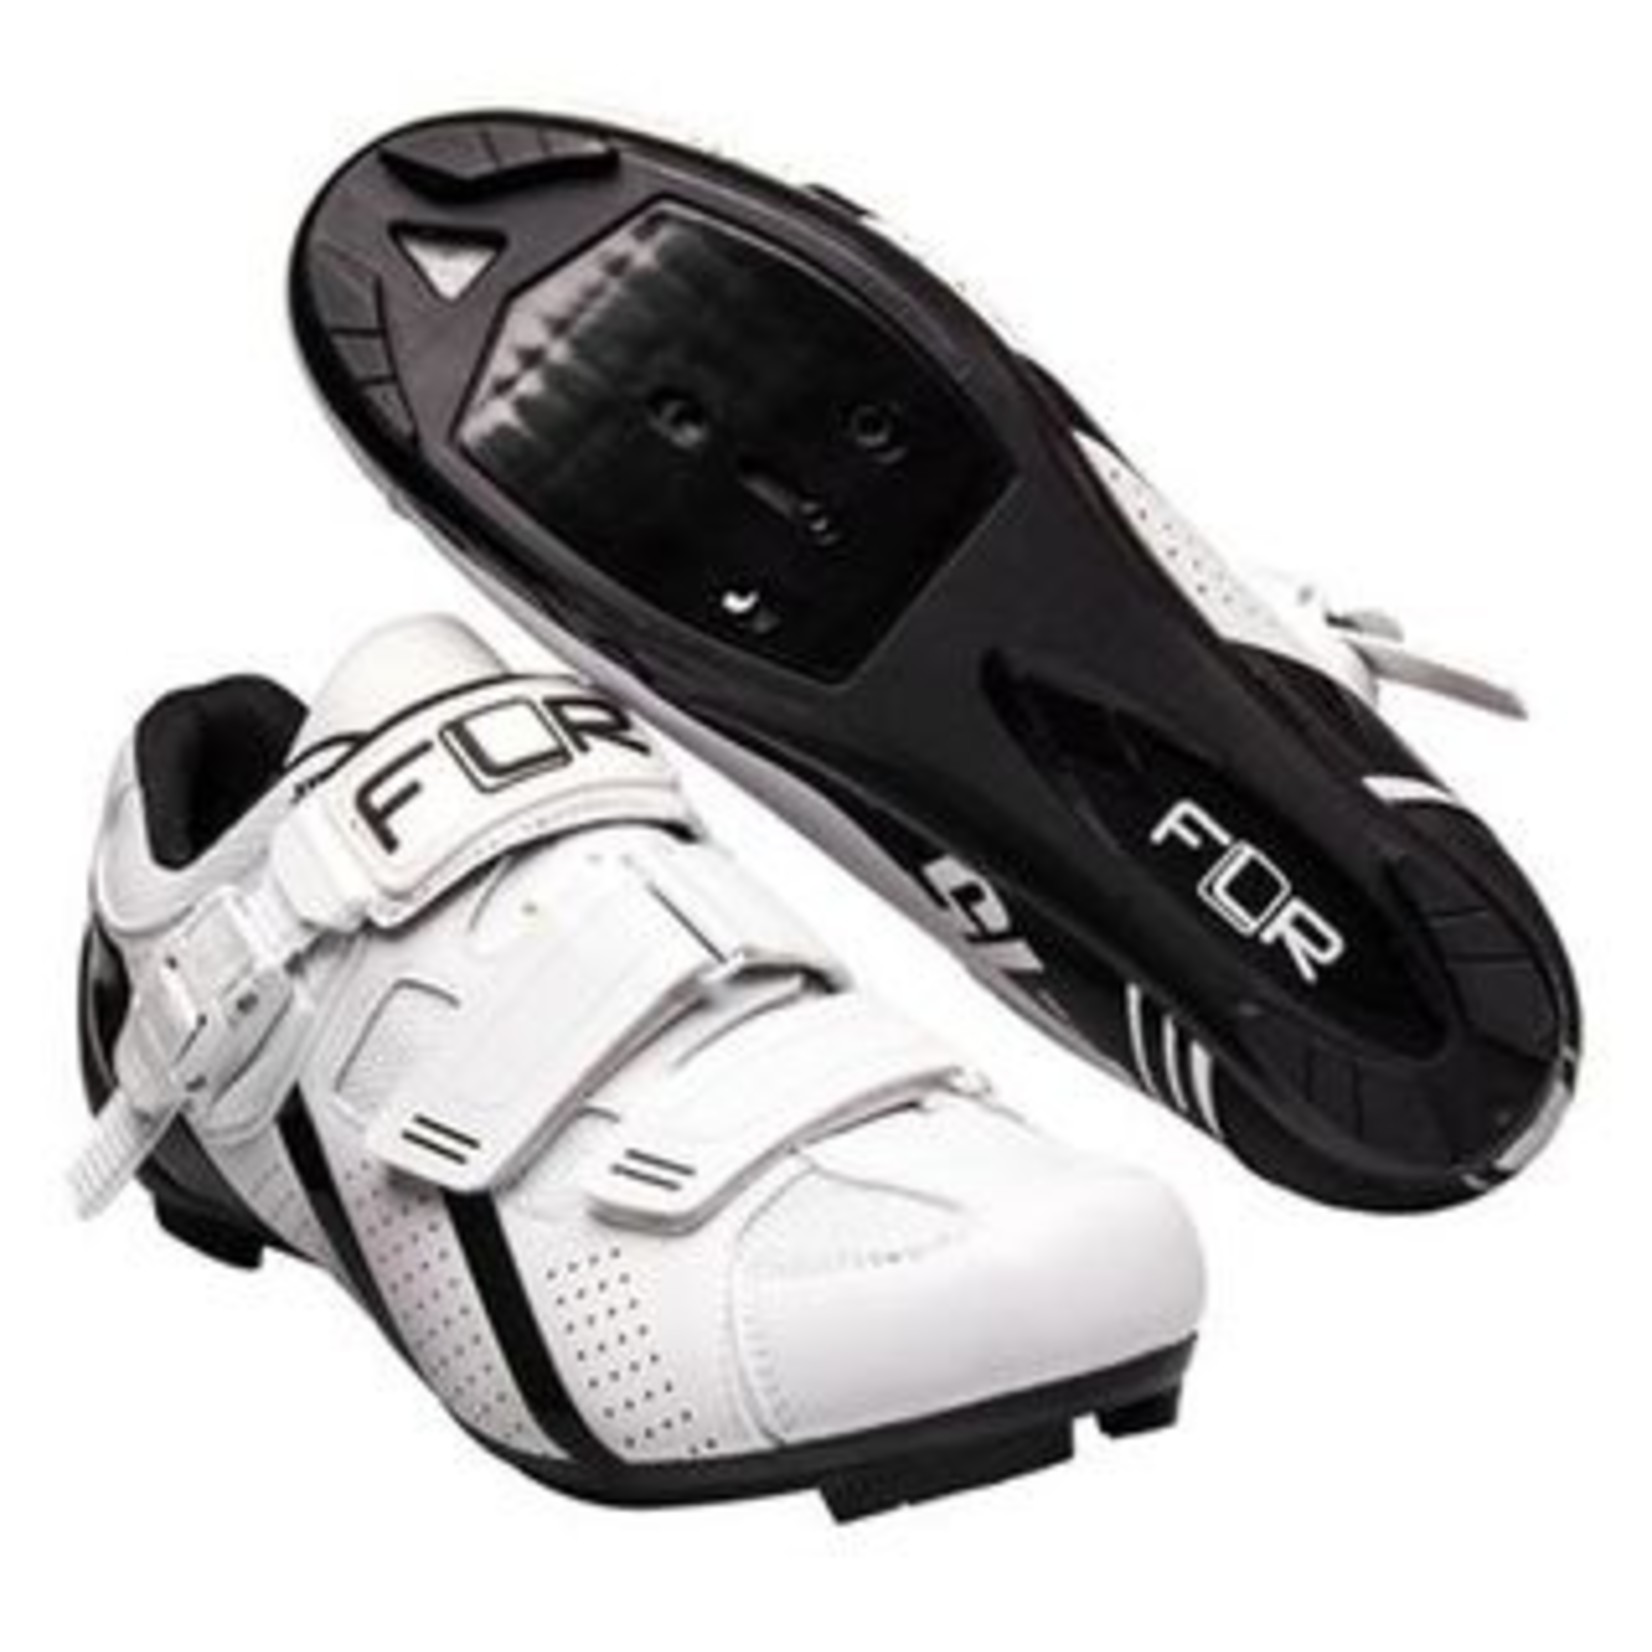 FLR FLR F-15-III - Pro Road Shoes - R250 Outsole - Clip & Laces - Size 45 - White